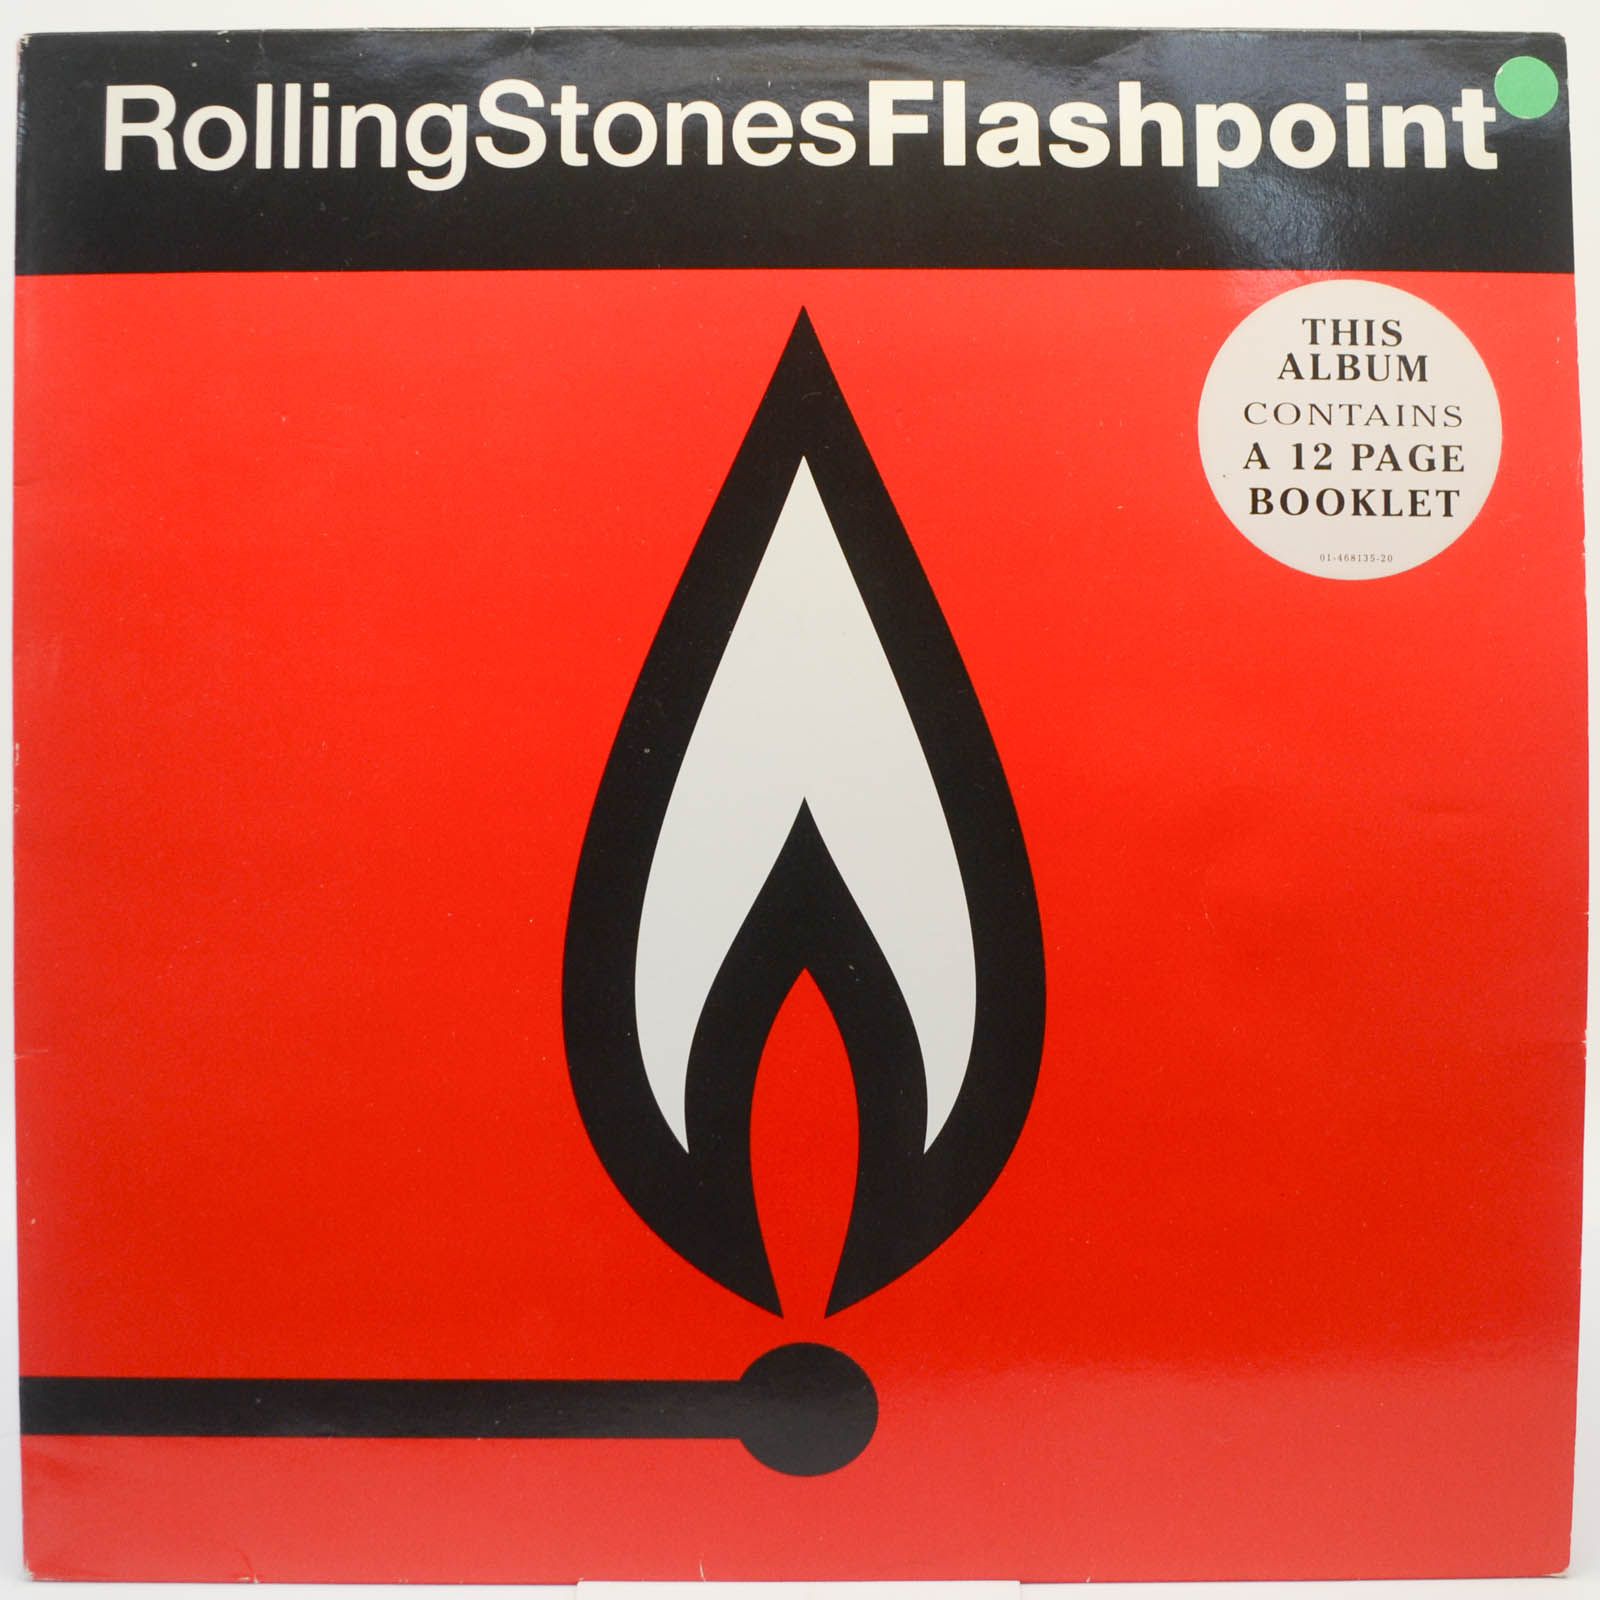 RollingStones — Flashpoint (booklet), 1991